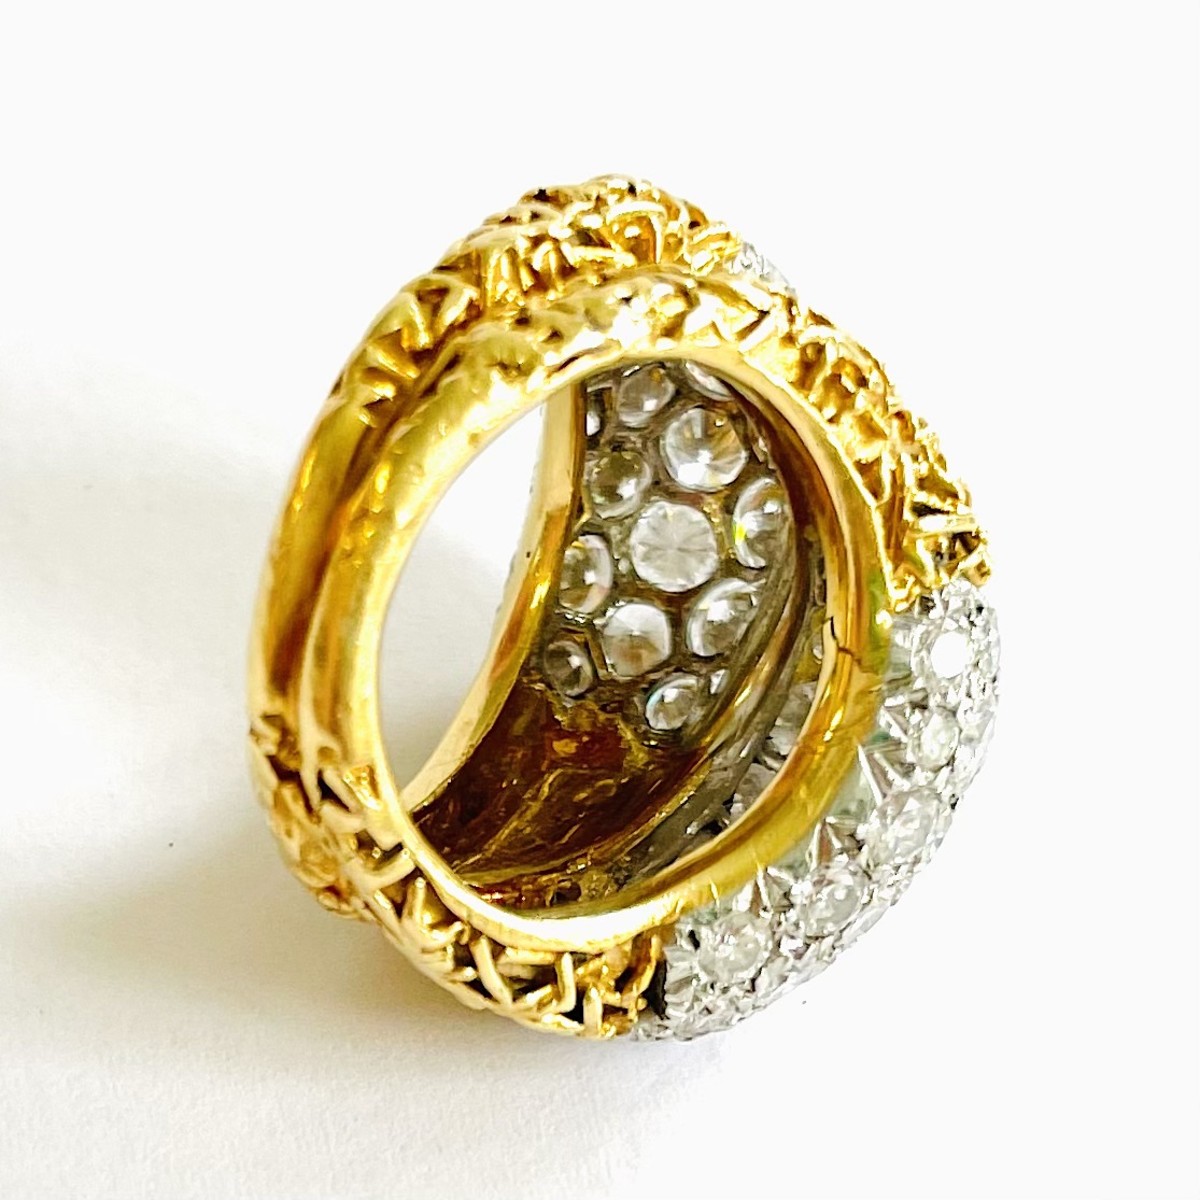 Van Cleef & Arpels 1960s 18KT Yellow Gold Diamond Ring back profile